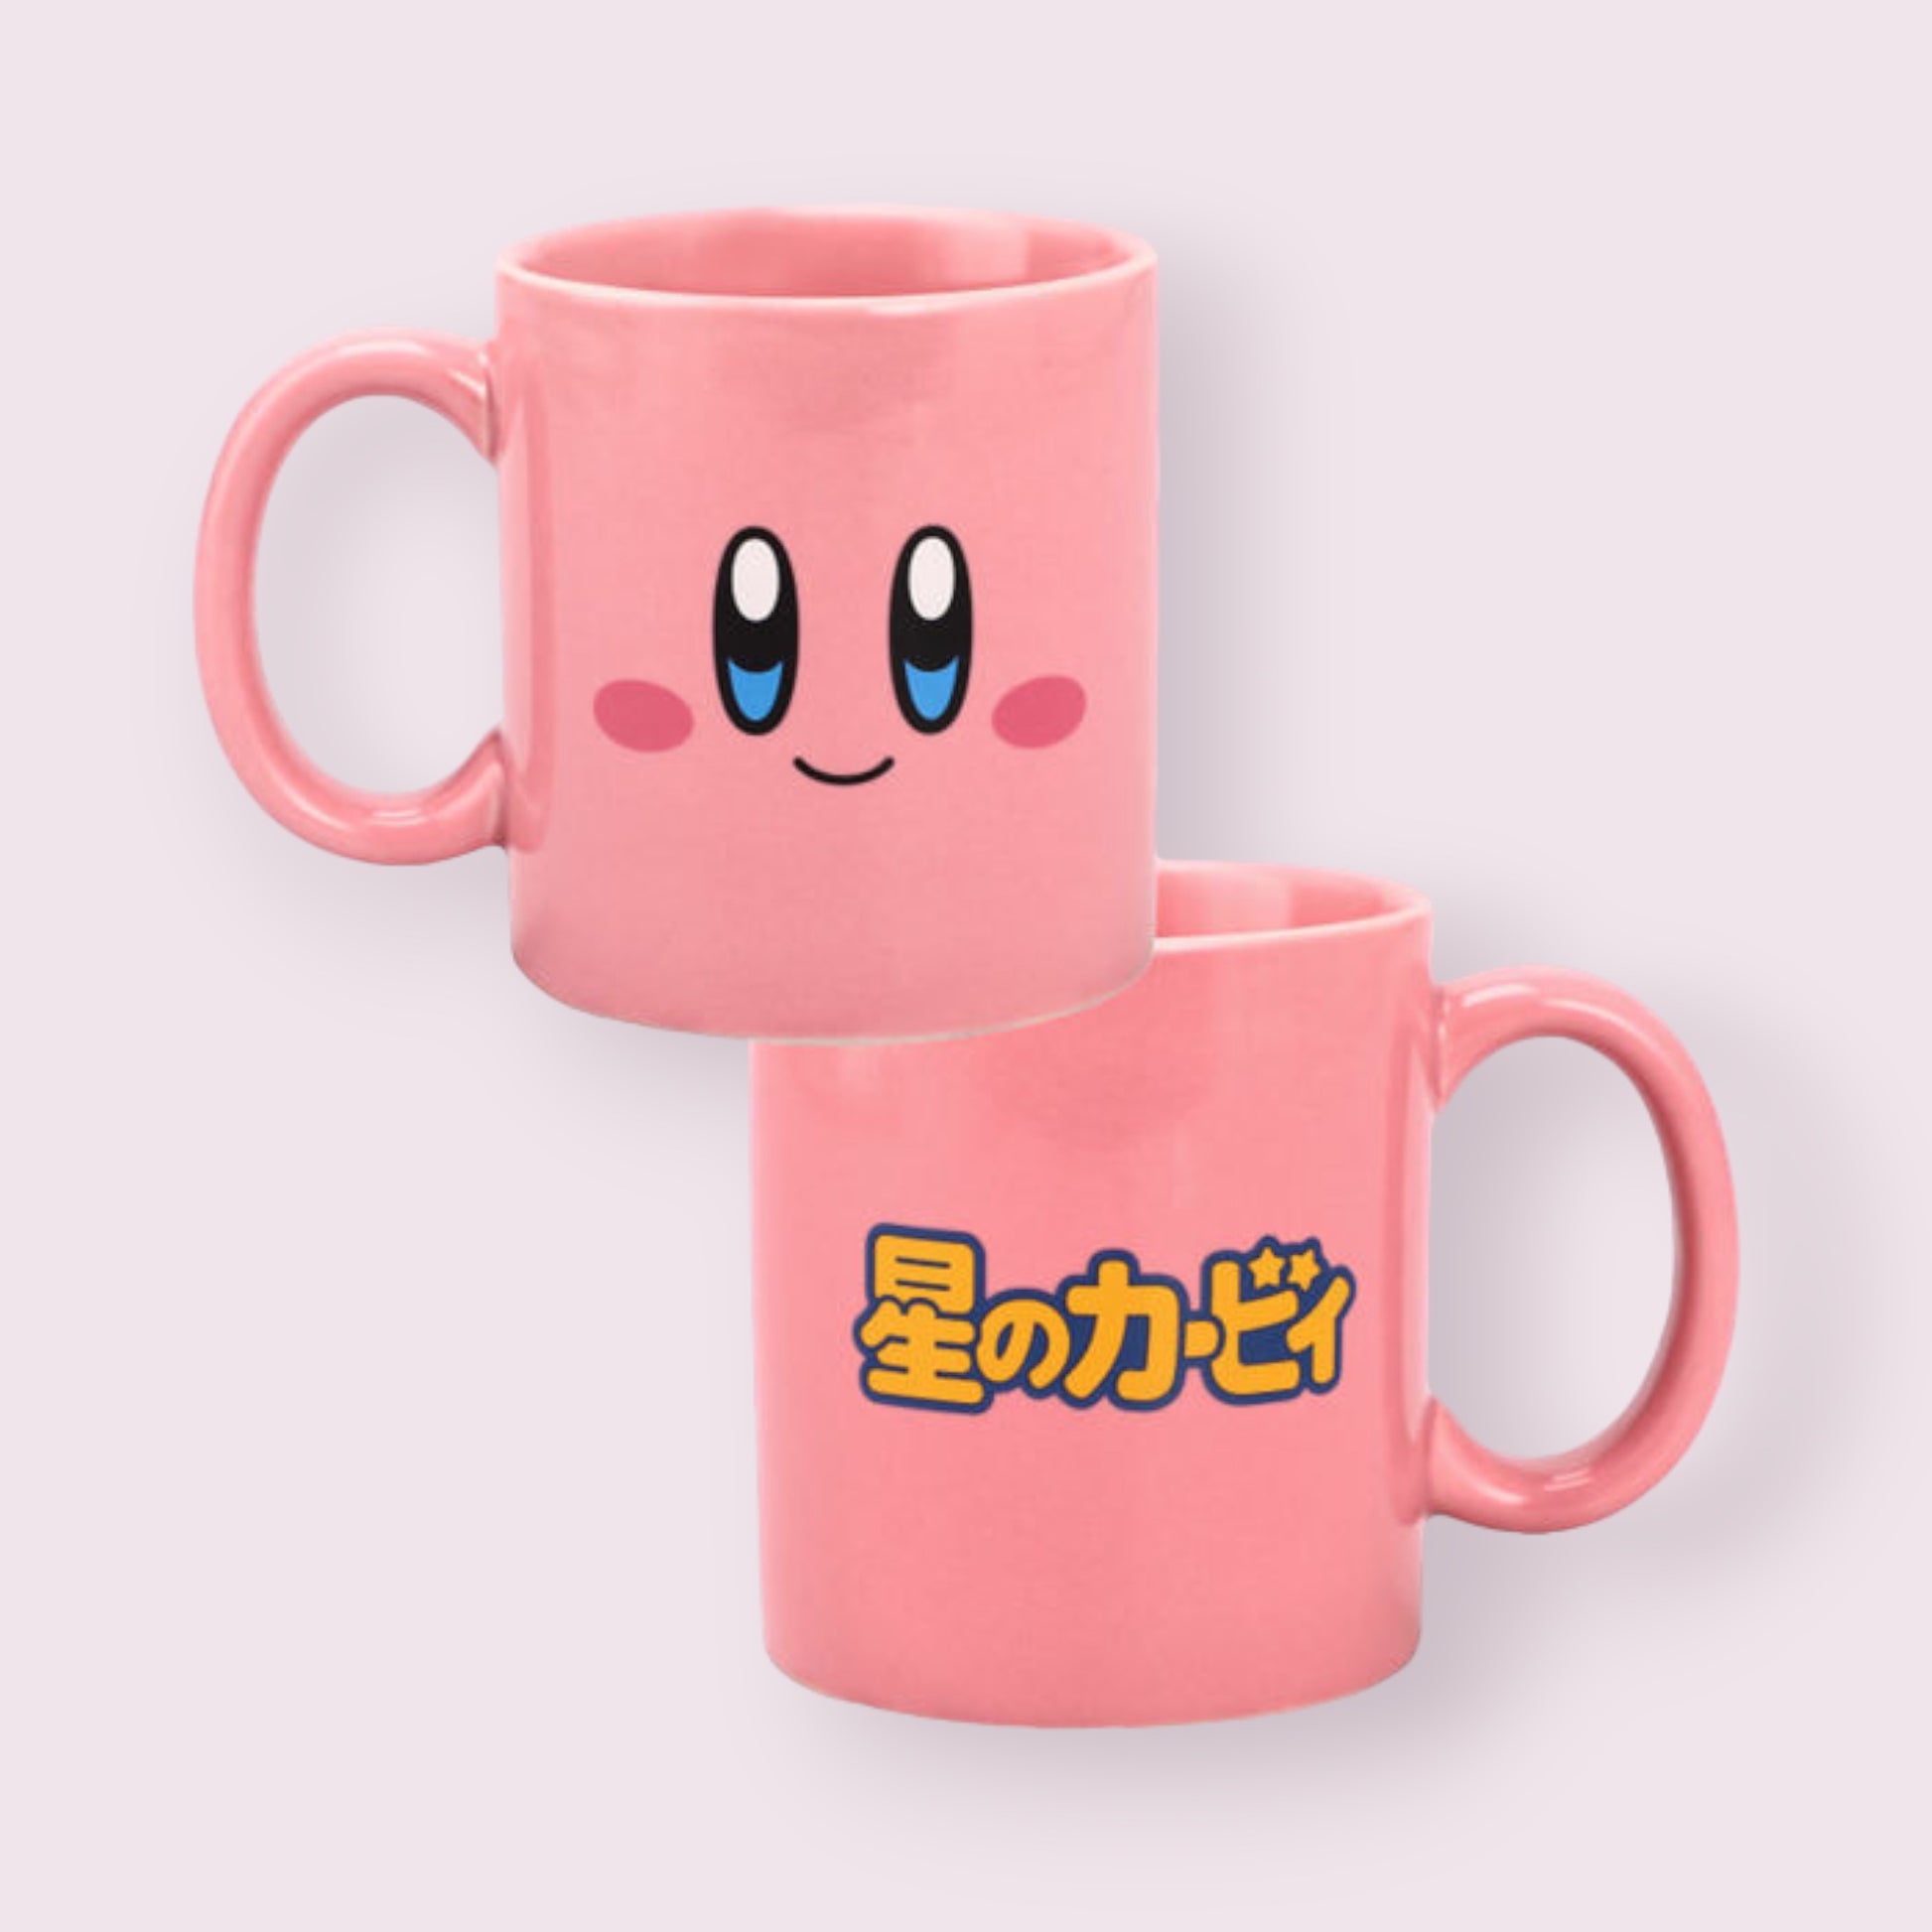 Kirby Mug in box  Pixie Candy Shoppe   